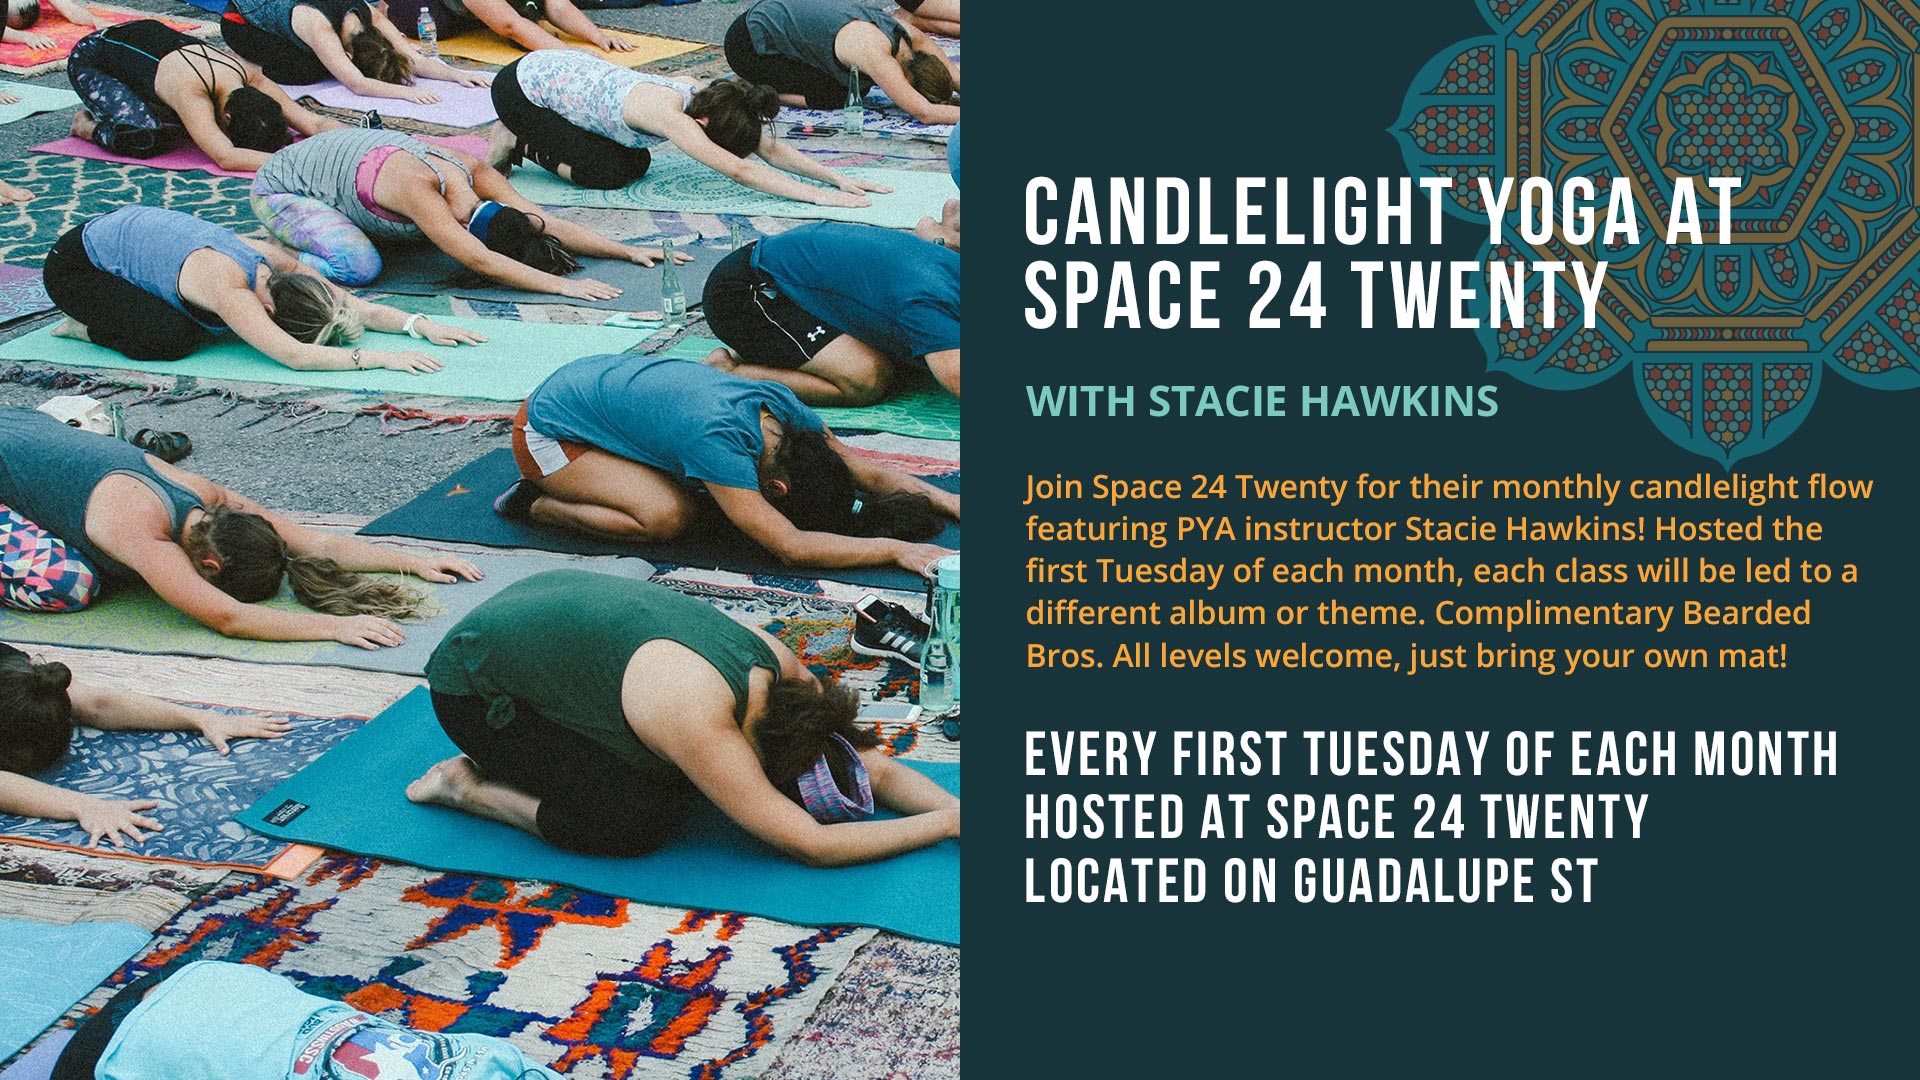 Candlelight Yoga with Practice Yoga Austin and Space 24 Twenty